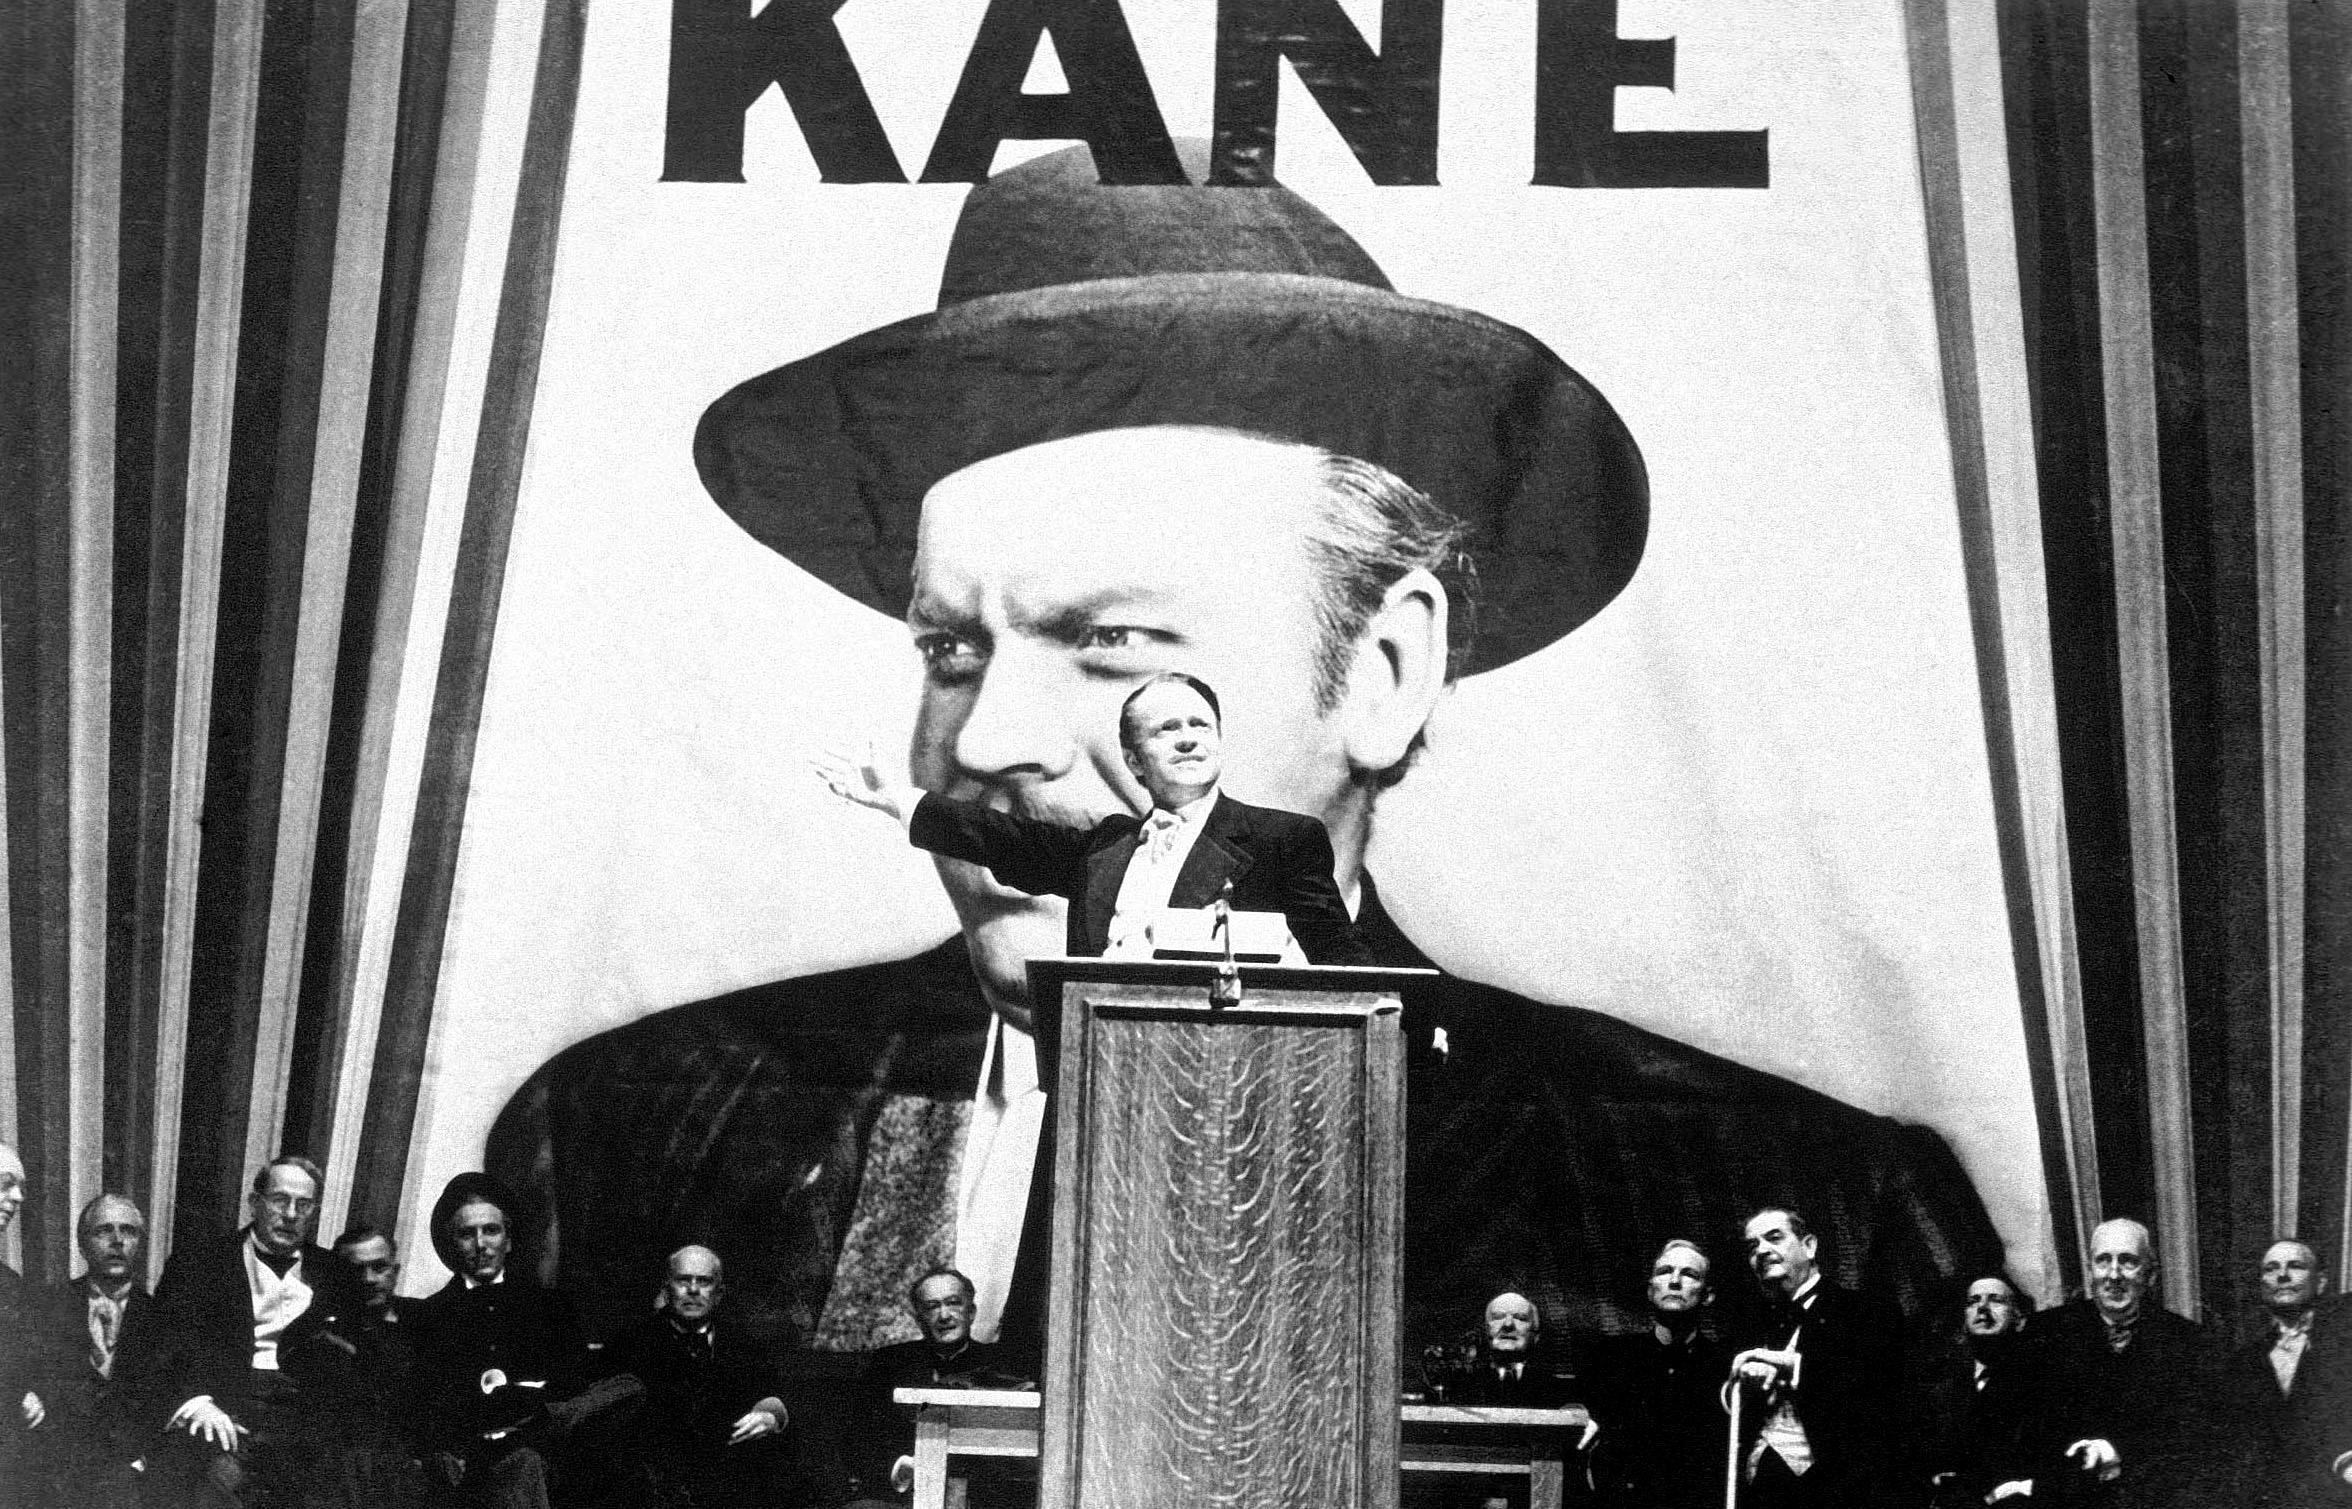 Orson Welles' Citizen Kane Still Resonates In Today's Culture